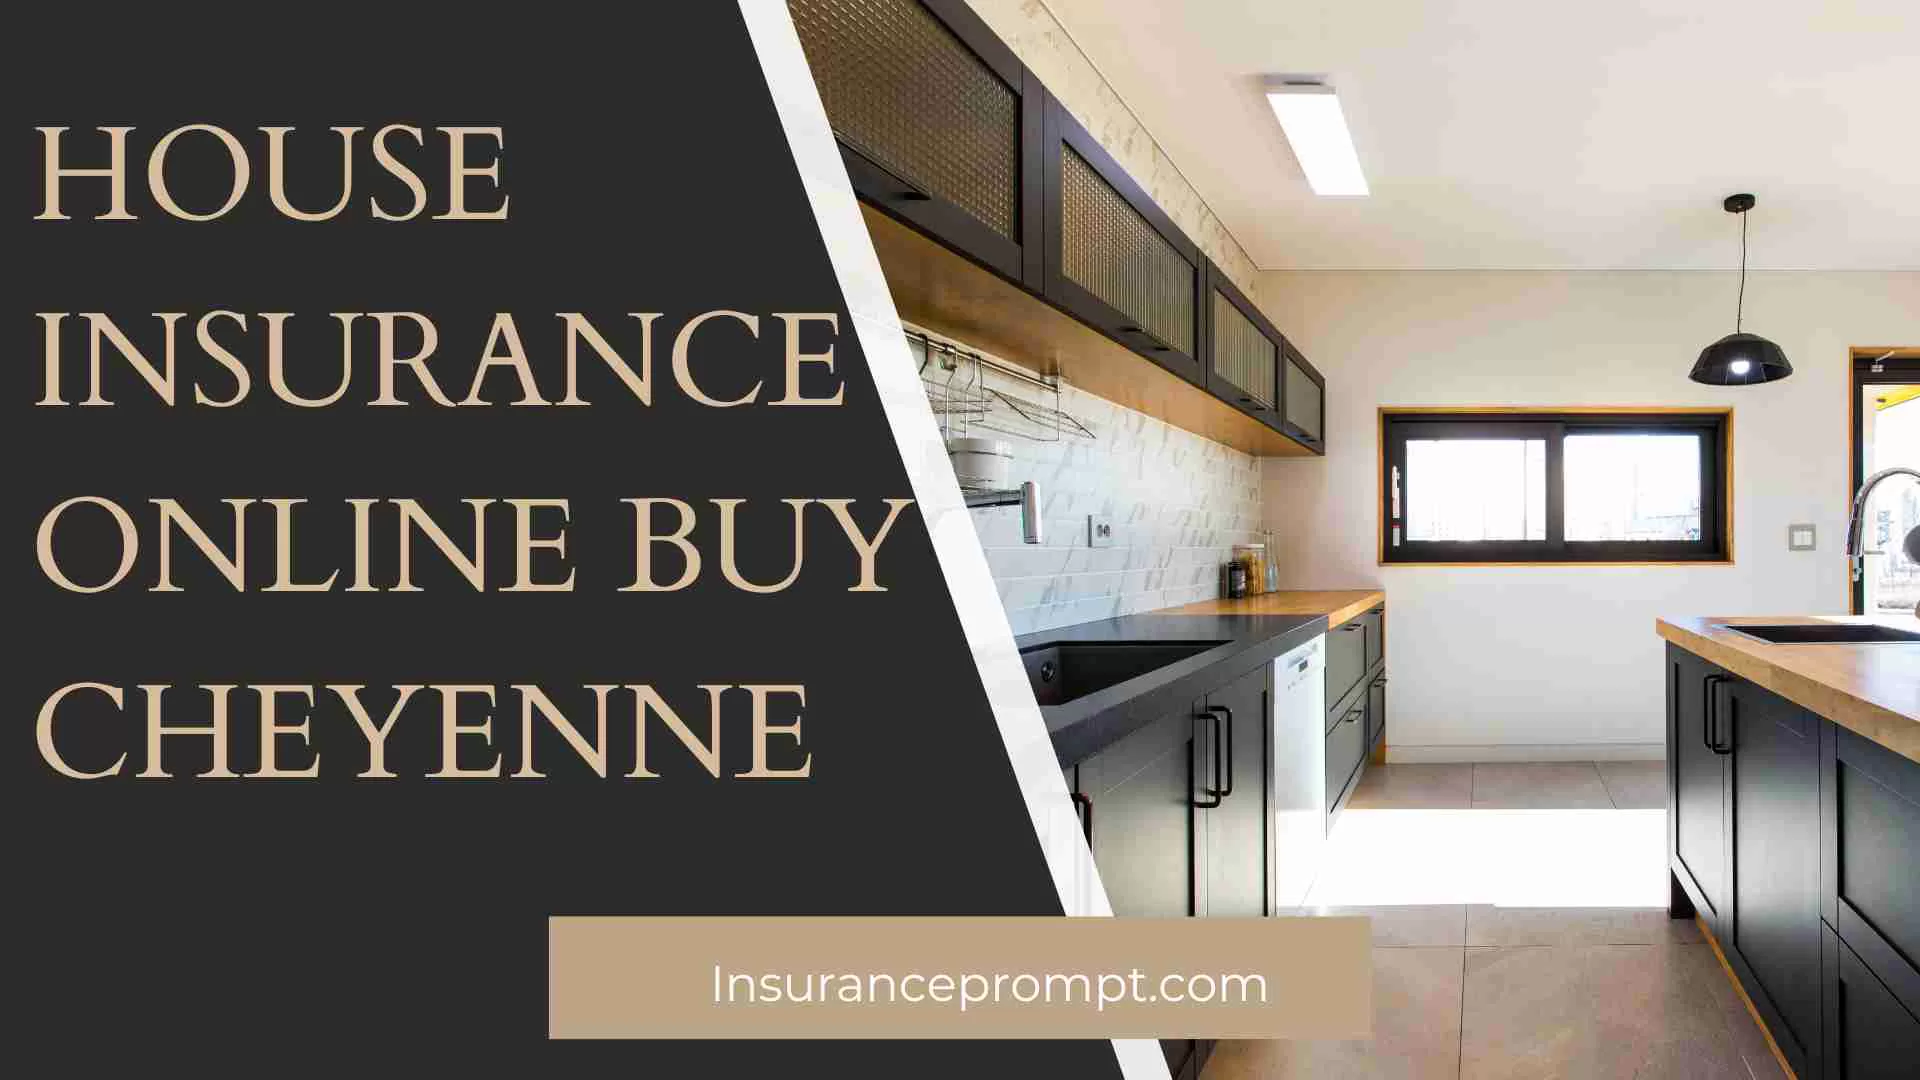 House Insurance Online Buy Cheyenne: Ultimate Guide 2023